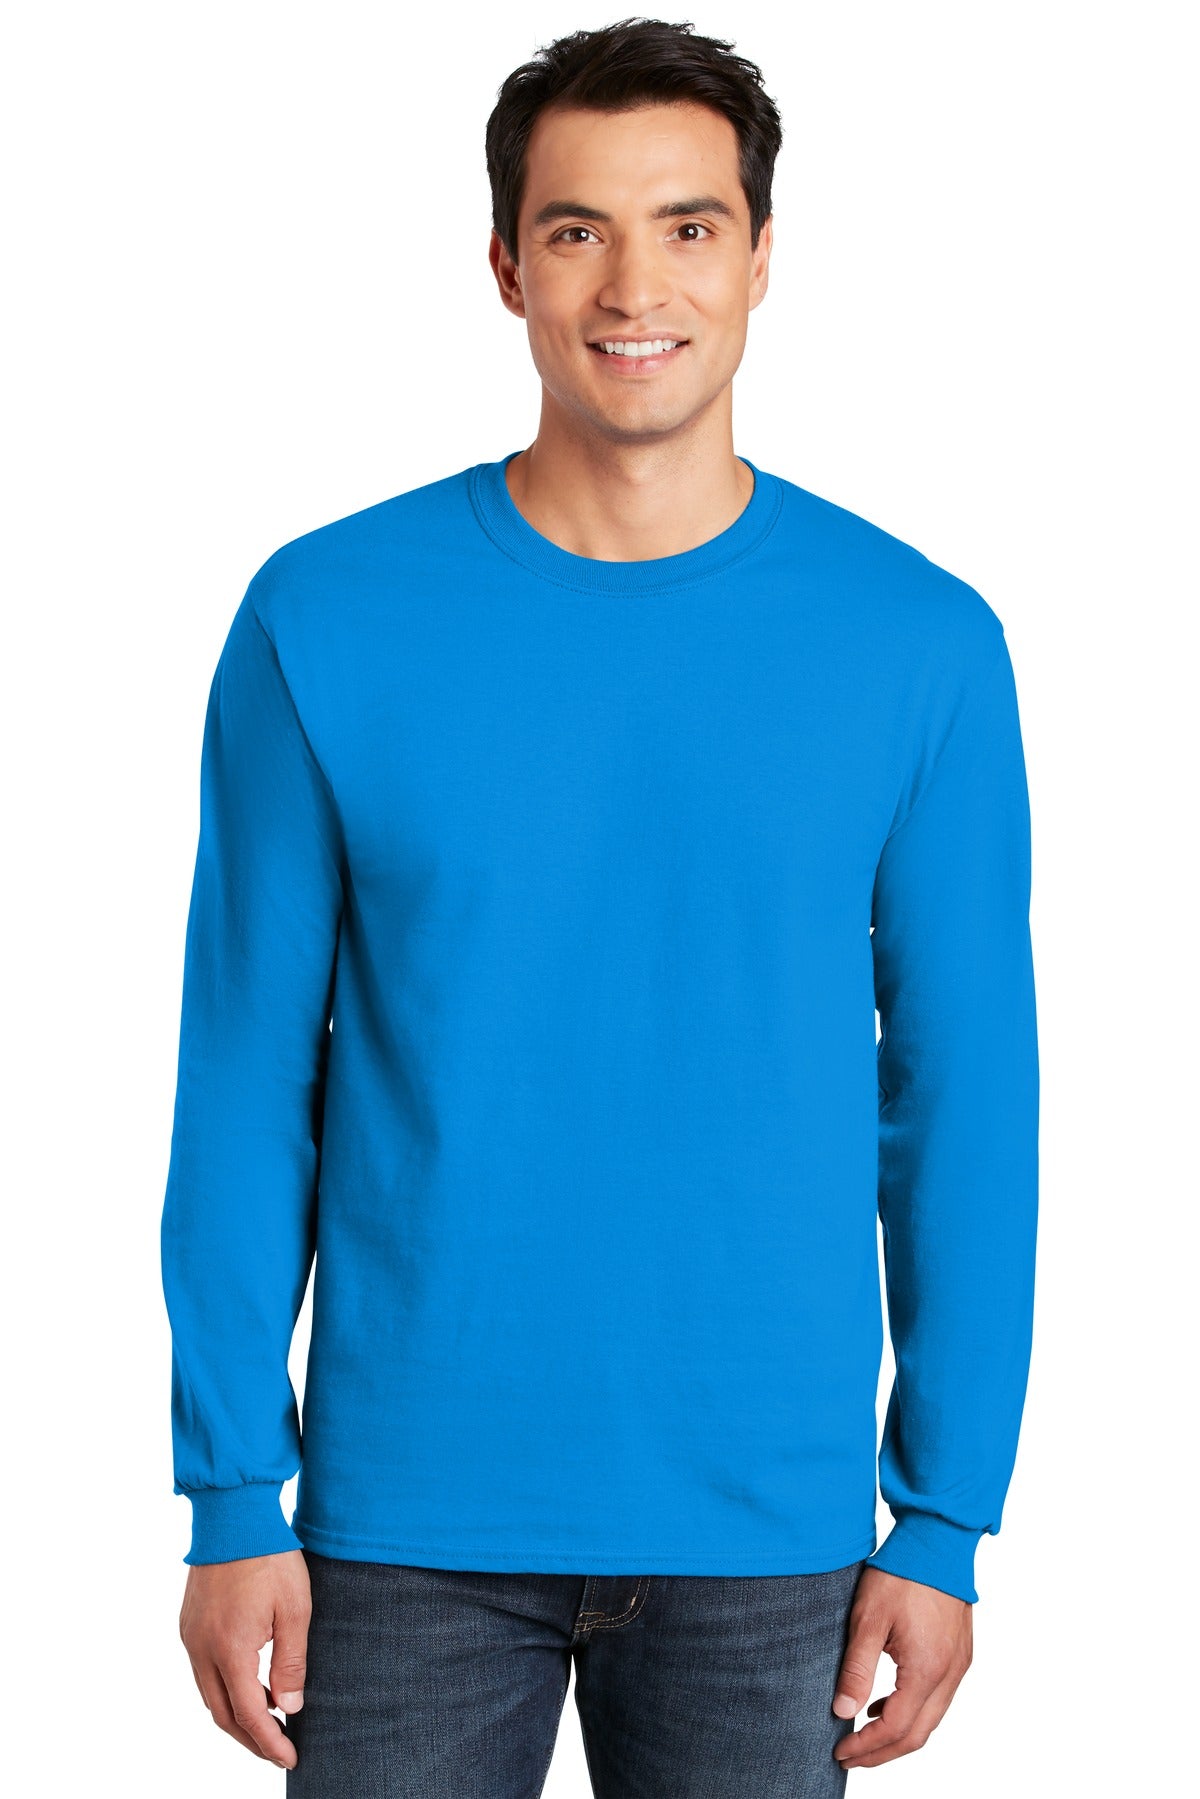 Blu - Long Sleeve Cotton Shirt - Shaped Fit - G-1645029 Clearance 